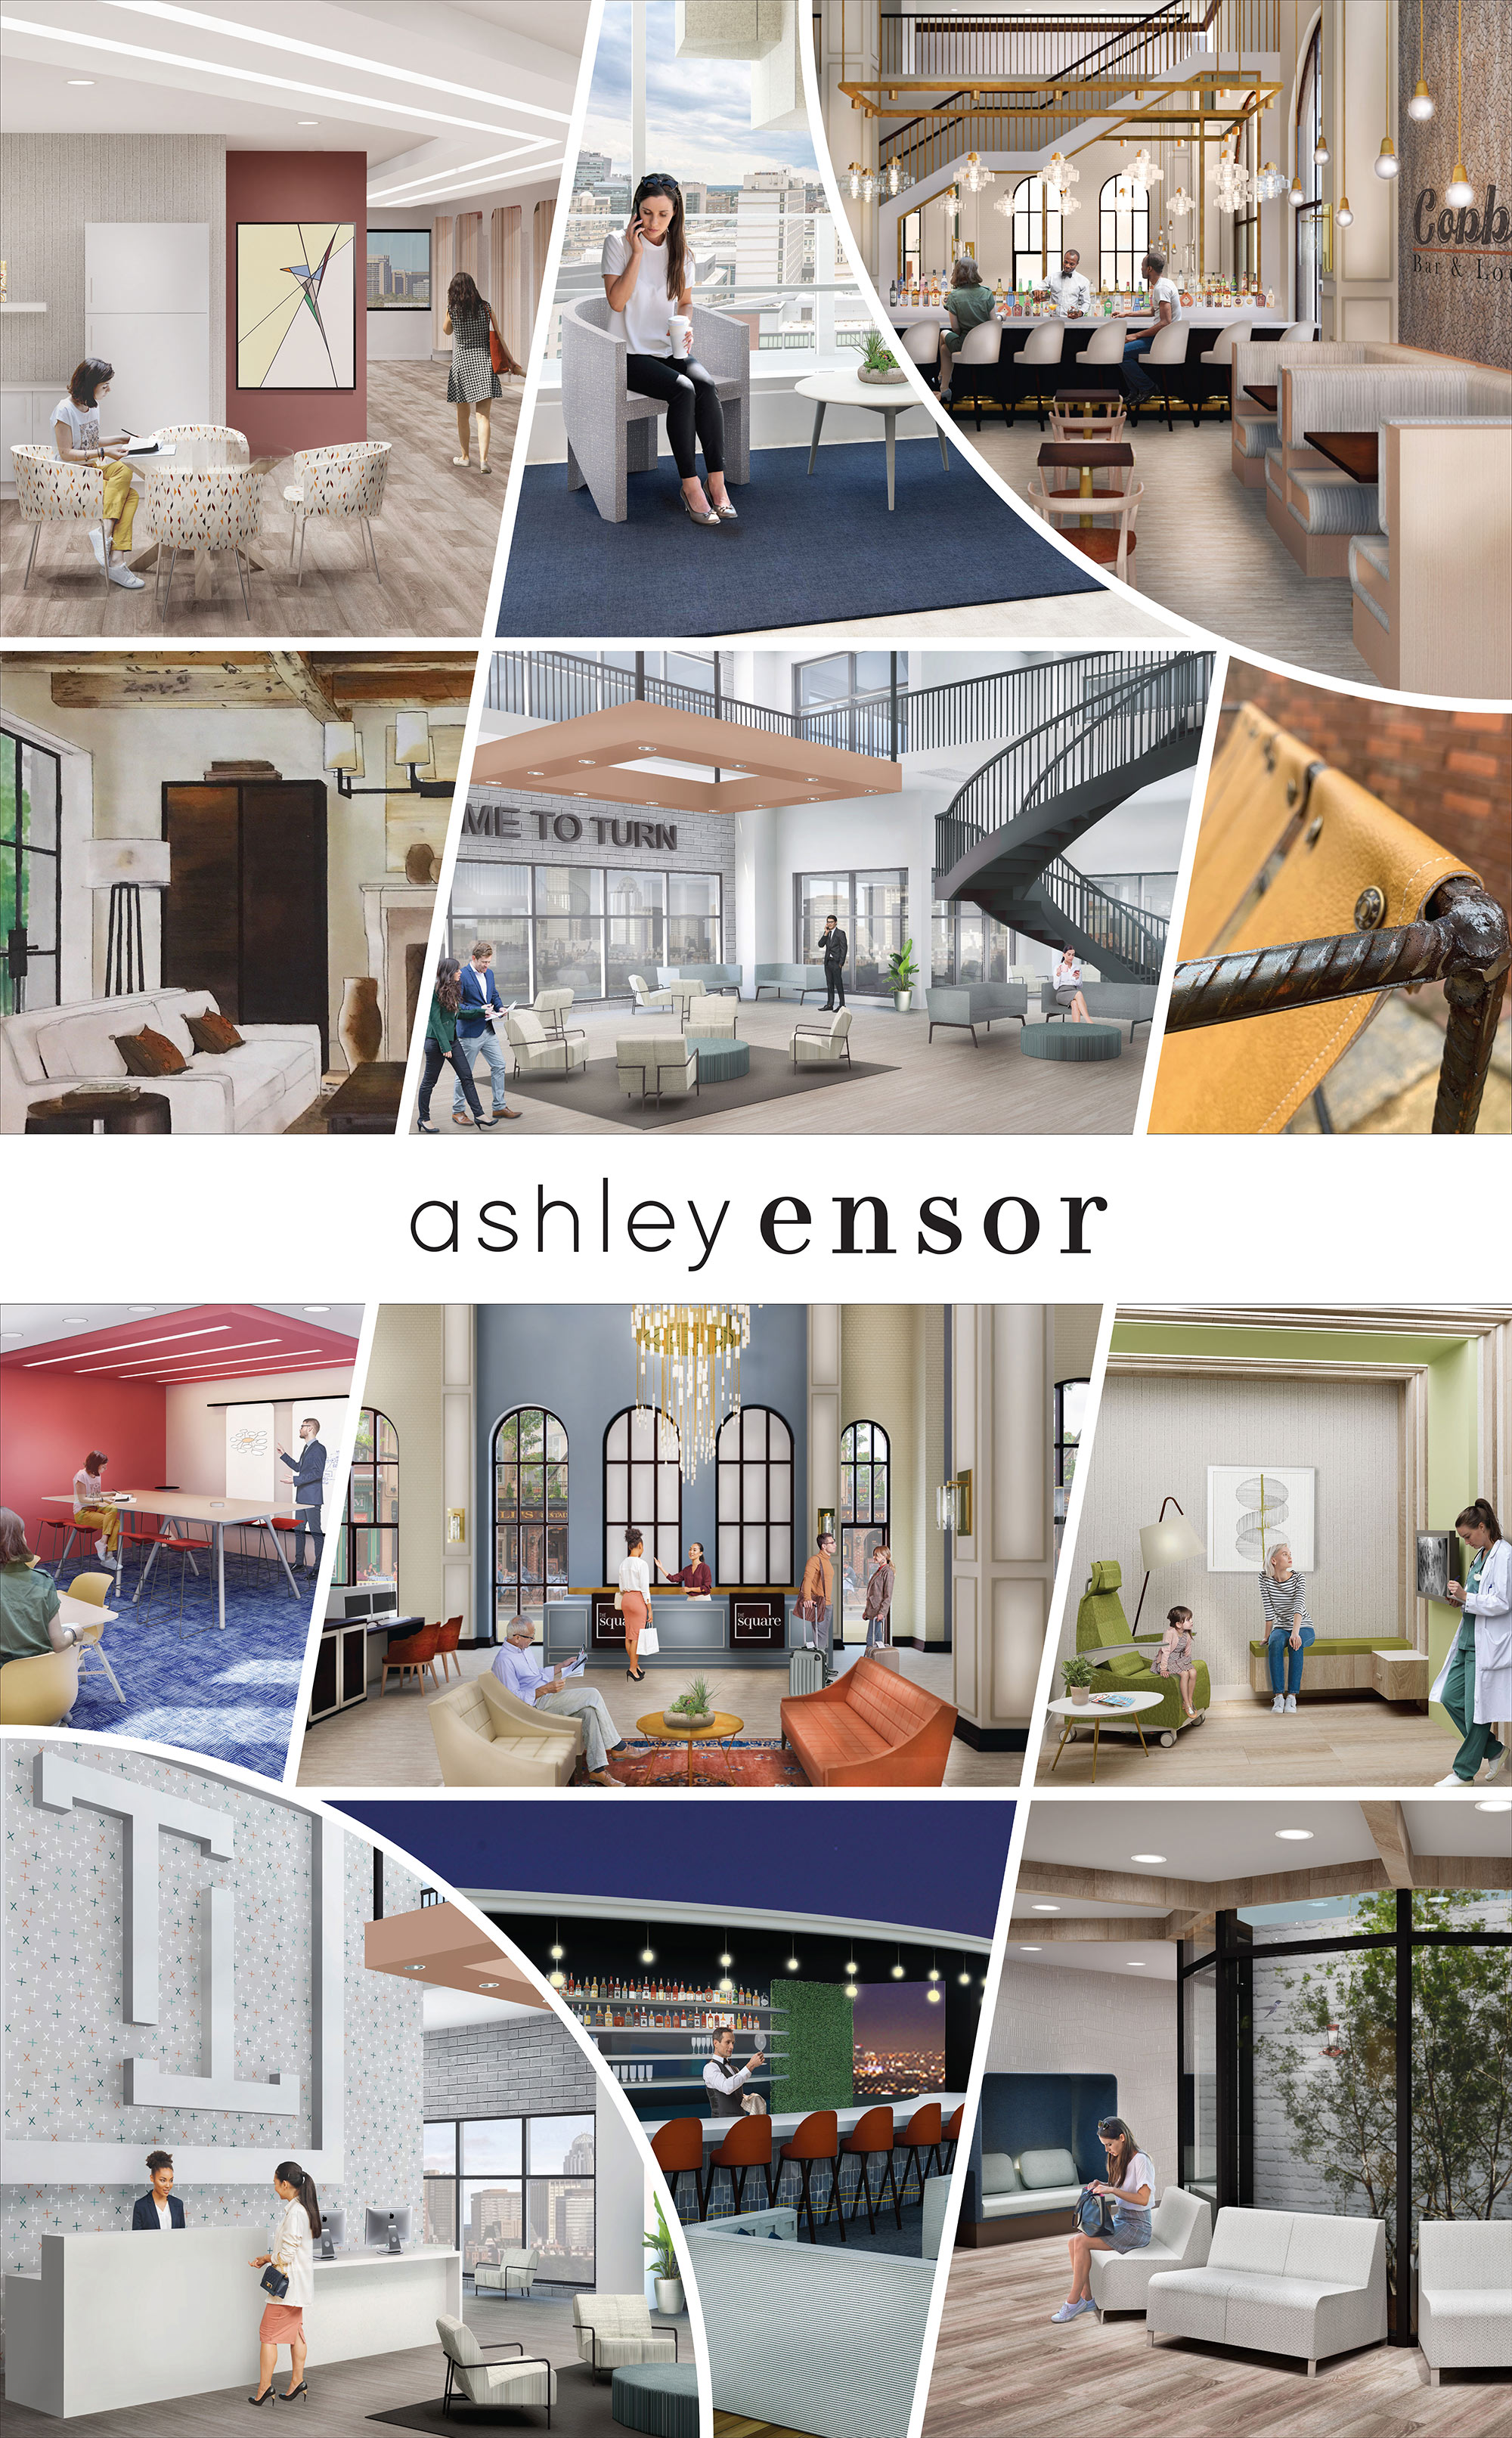 Ashley Ensor's senior exhibit board